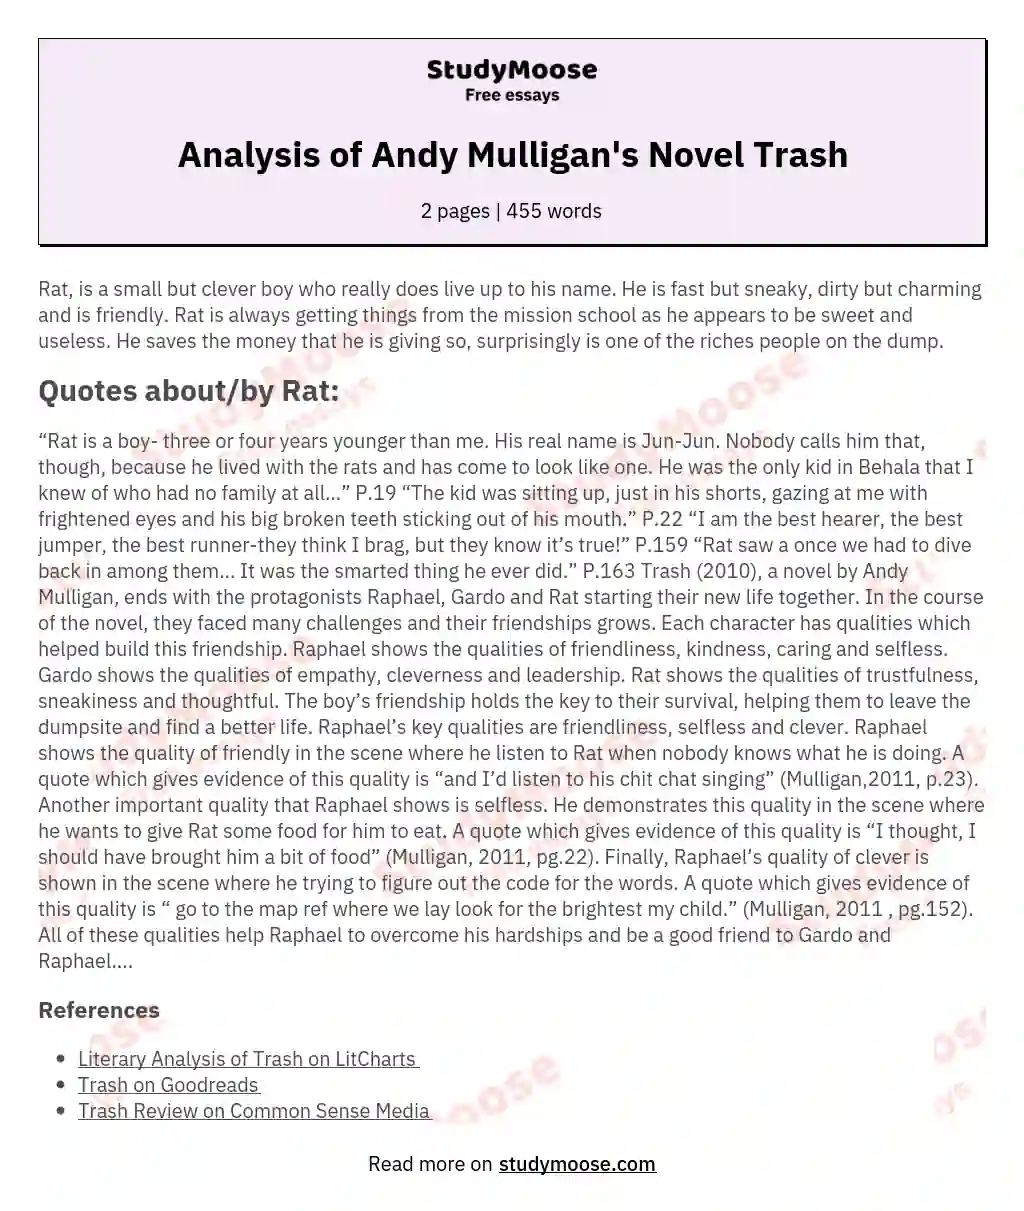 Analysis of Andy Mulligan's Novel Trash